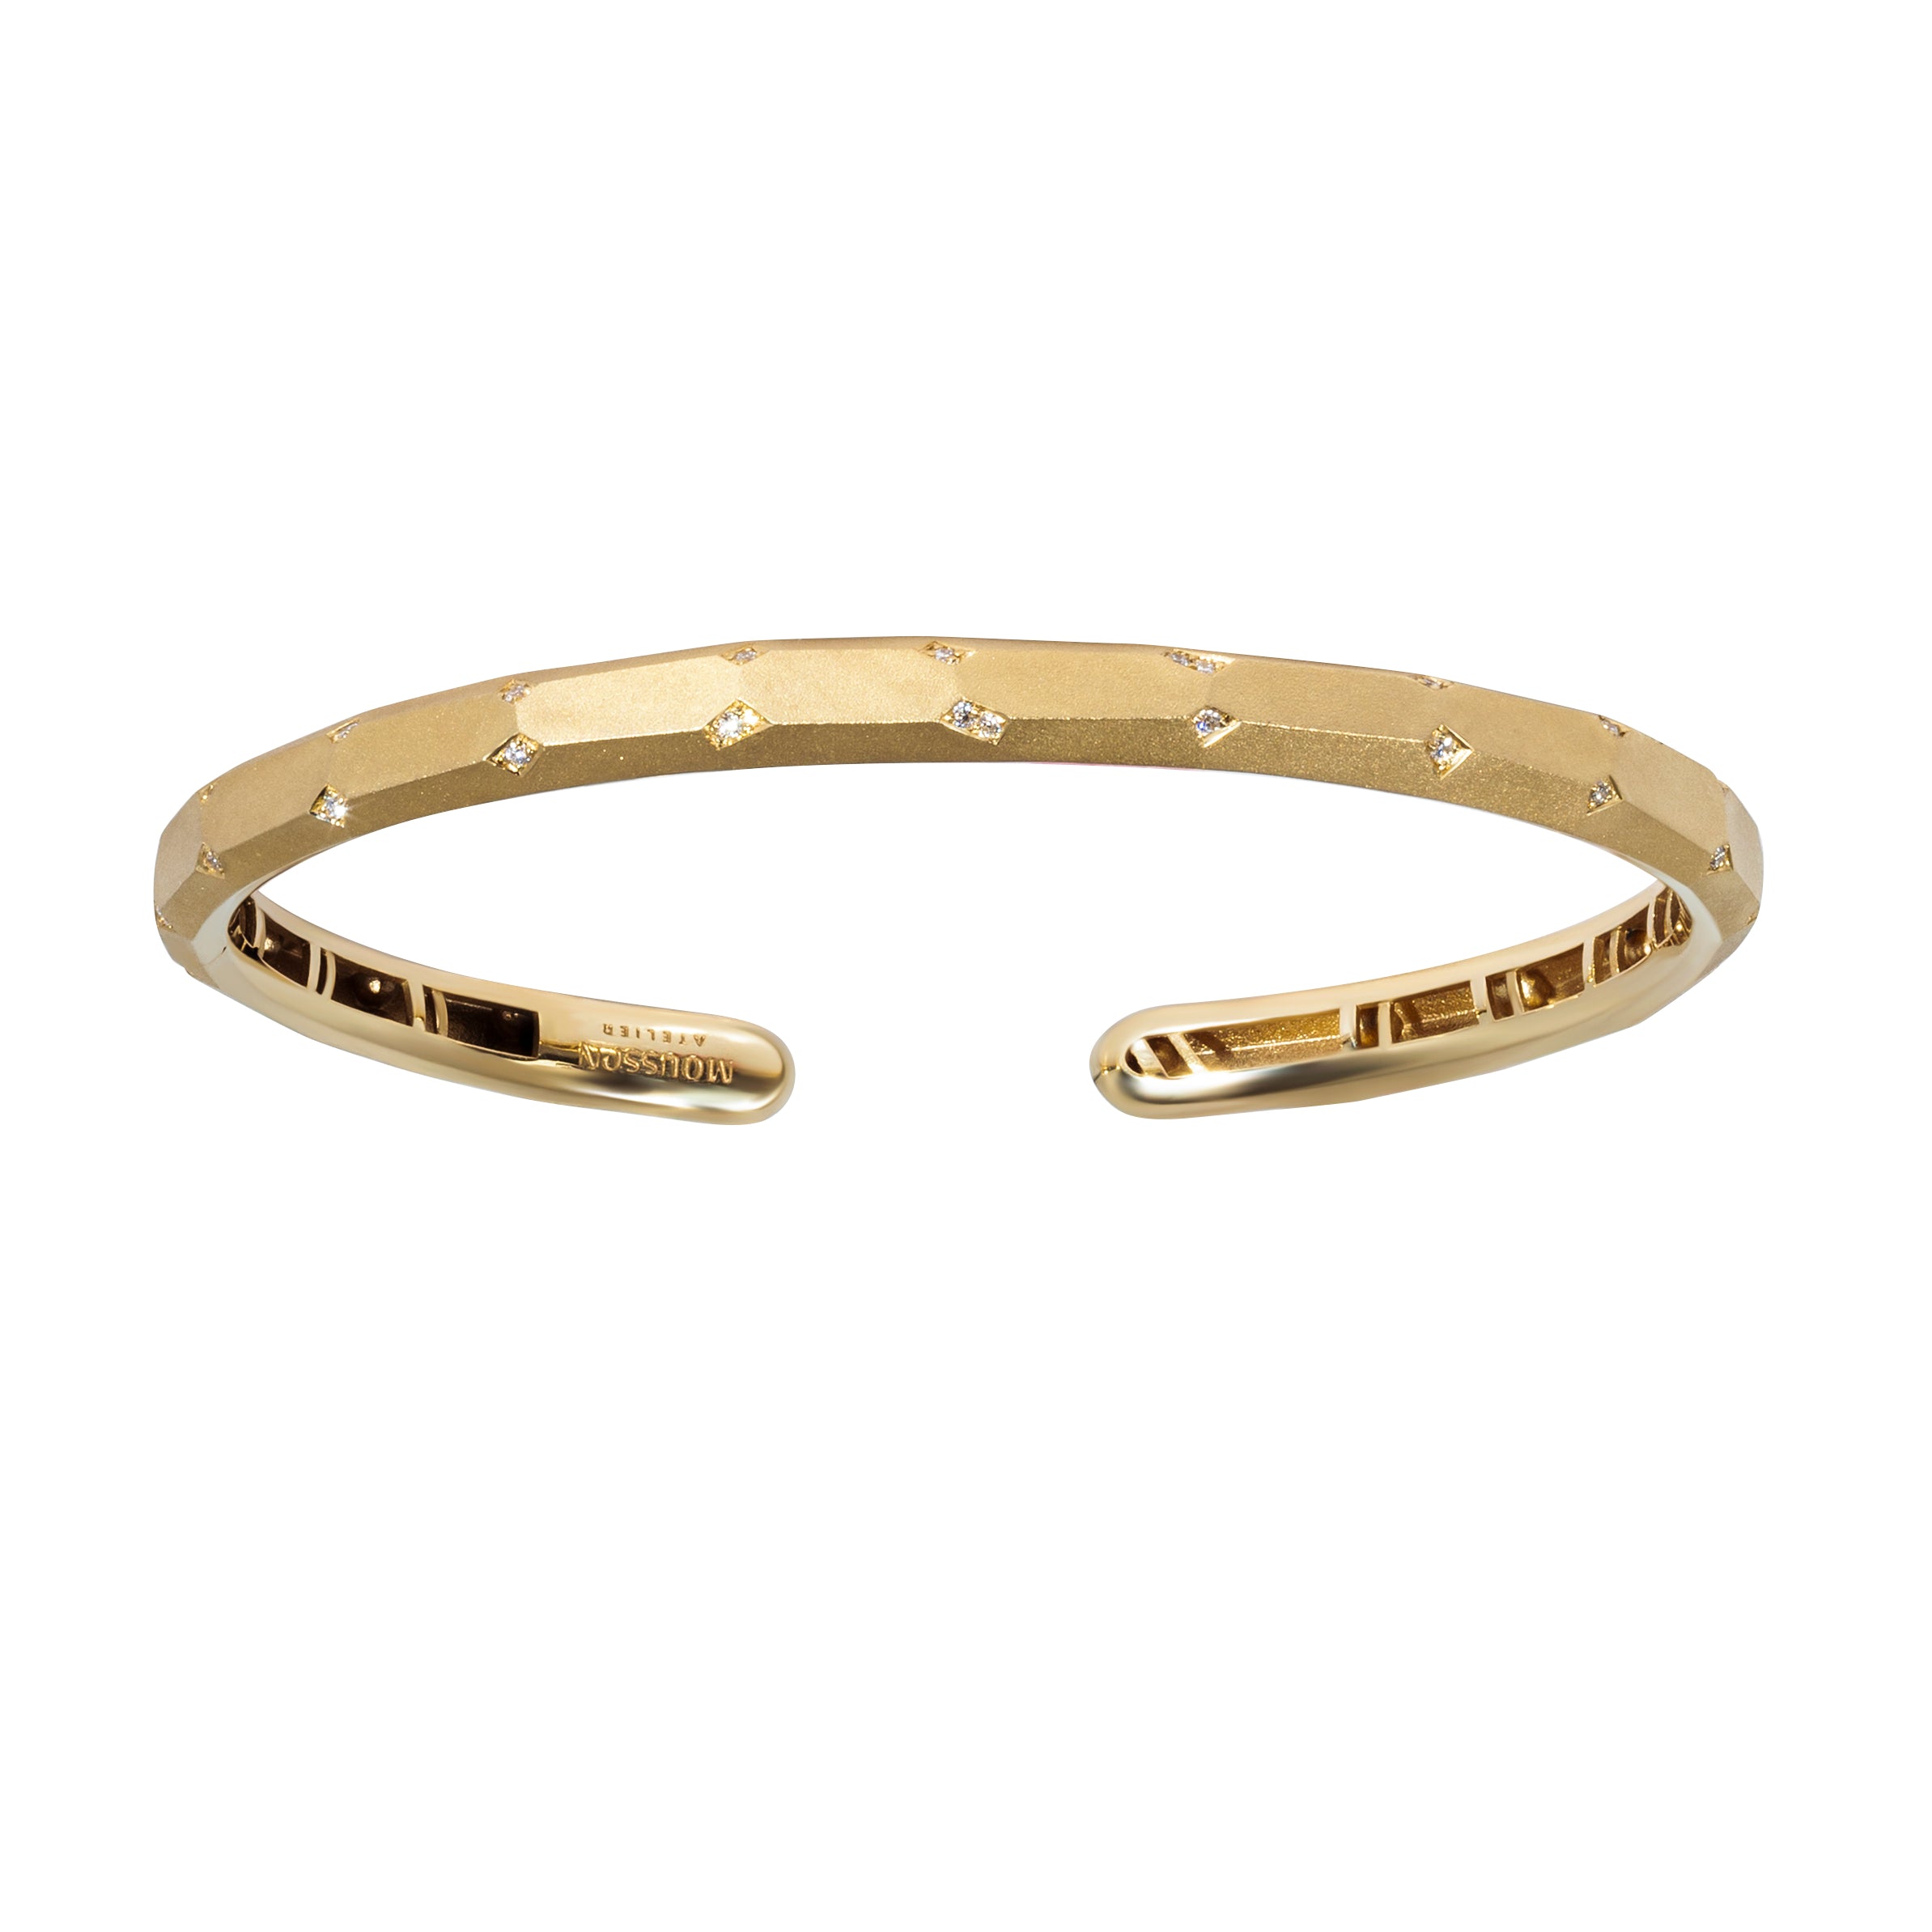 Br 0190-2, 18K Yellow Gold, Diamonds Bracelet